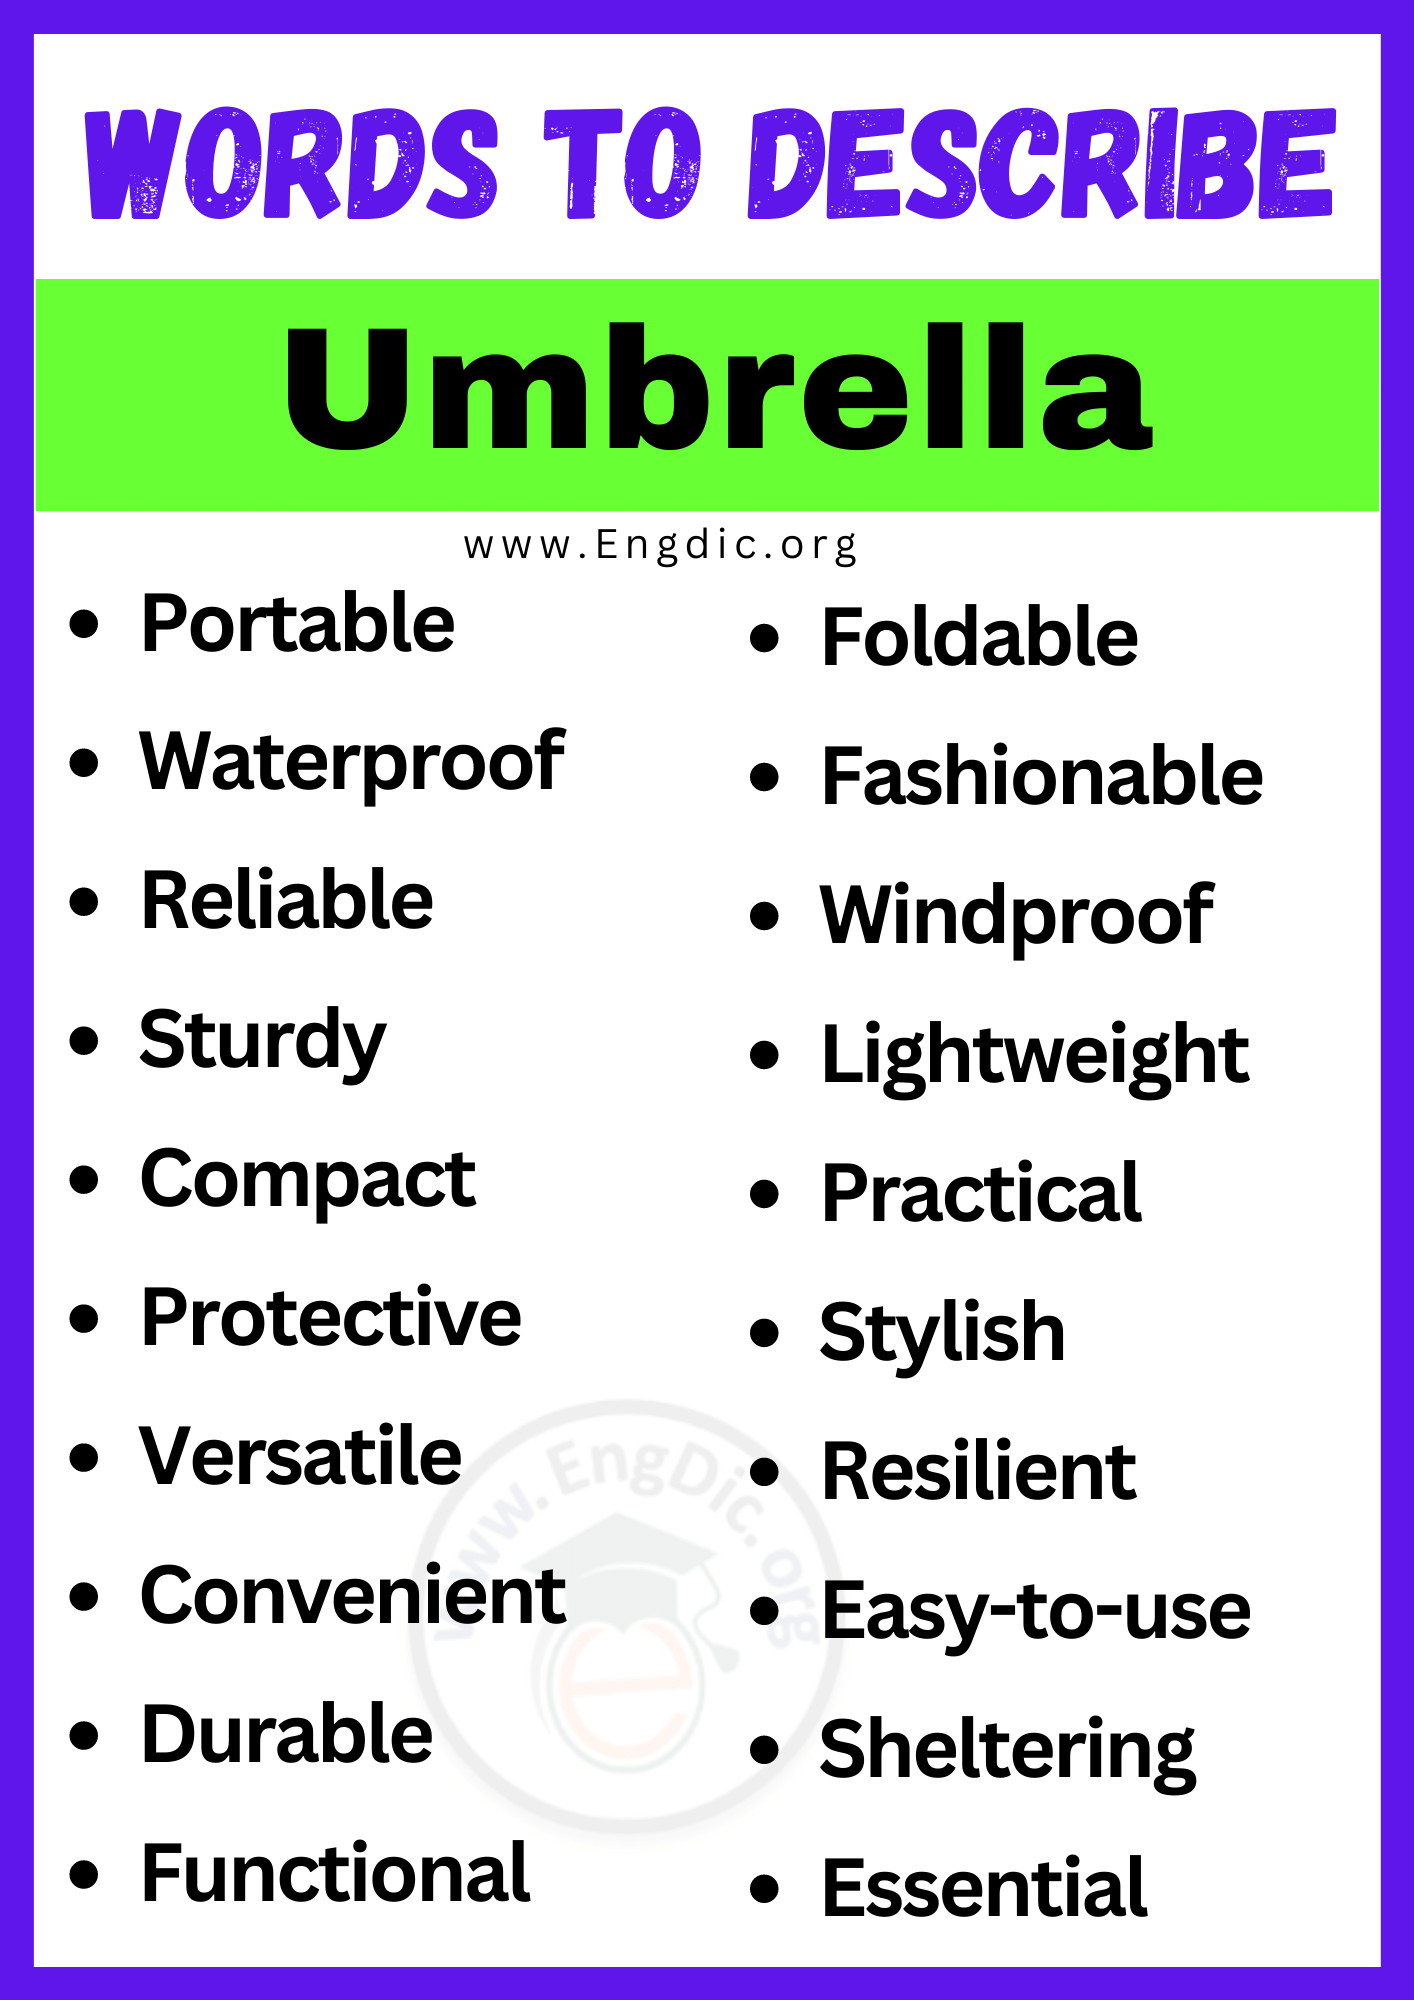 Words to Describe Umbrella